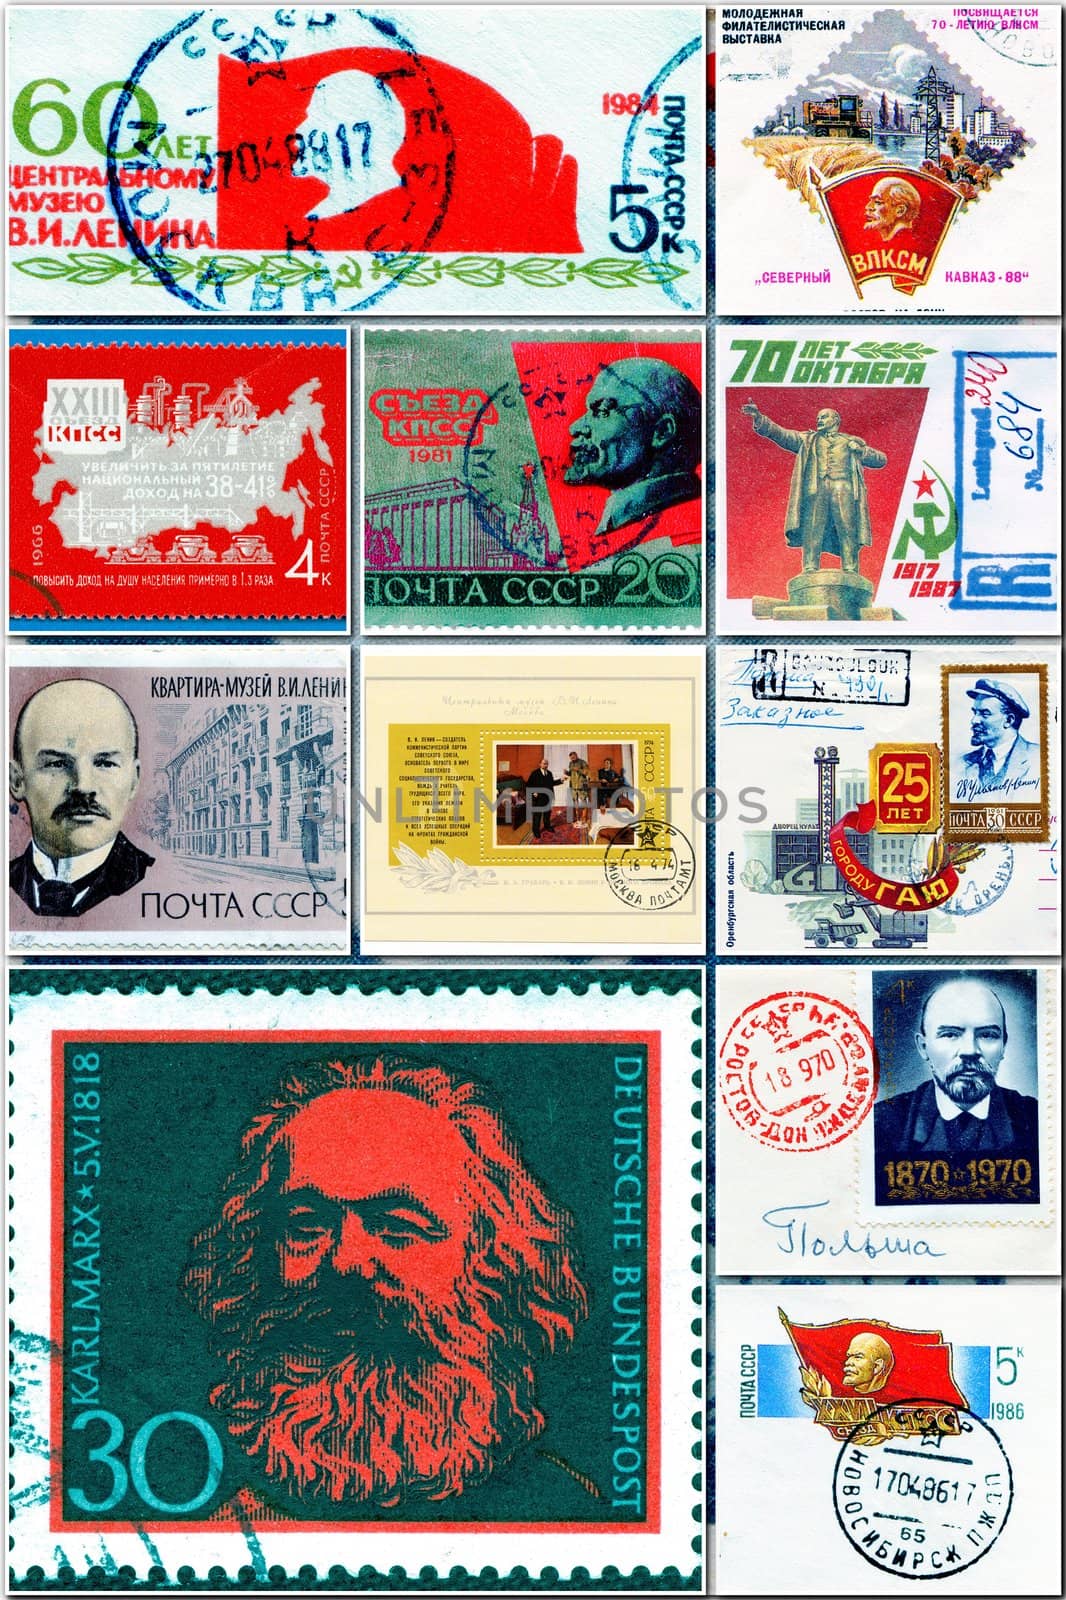 communists collage